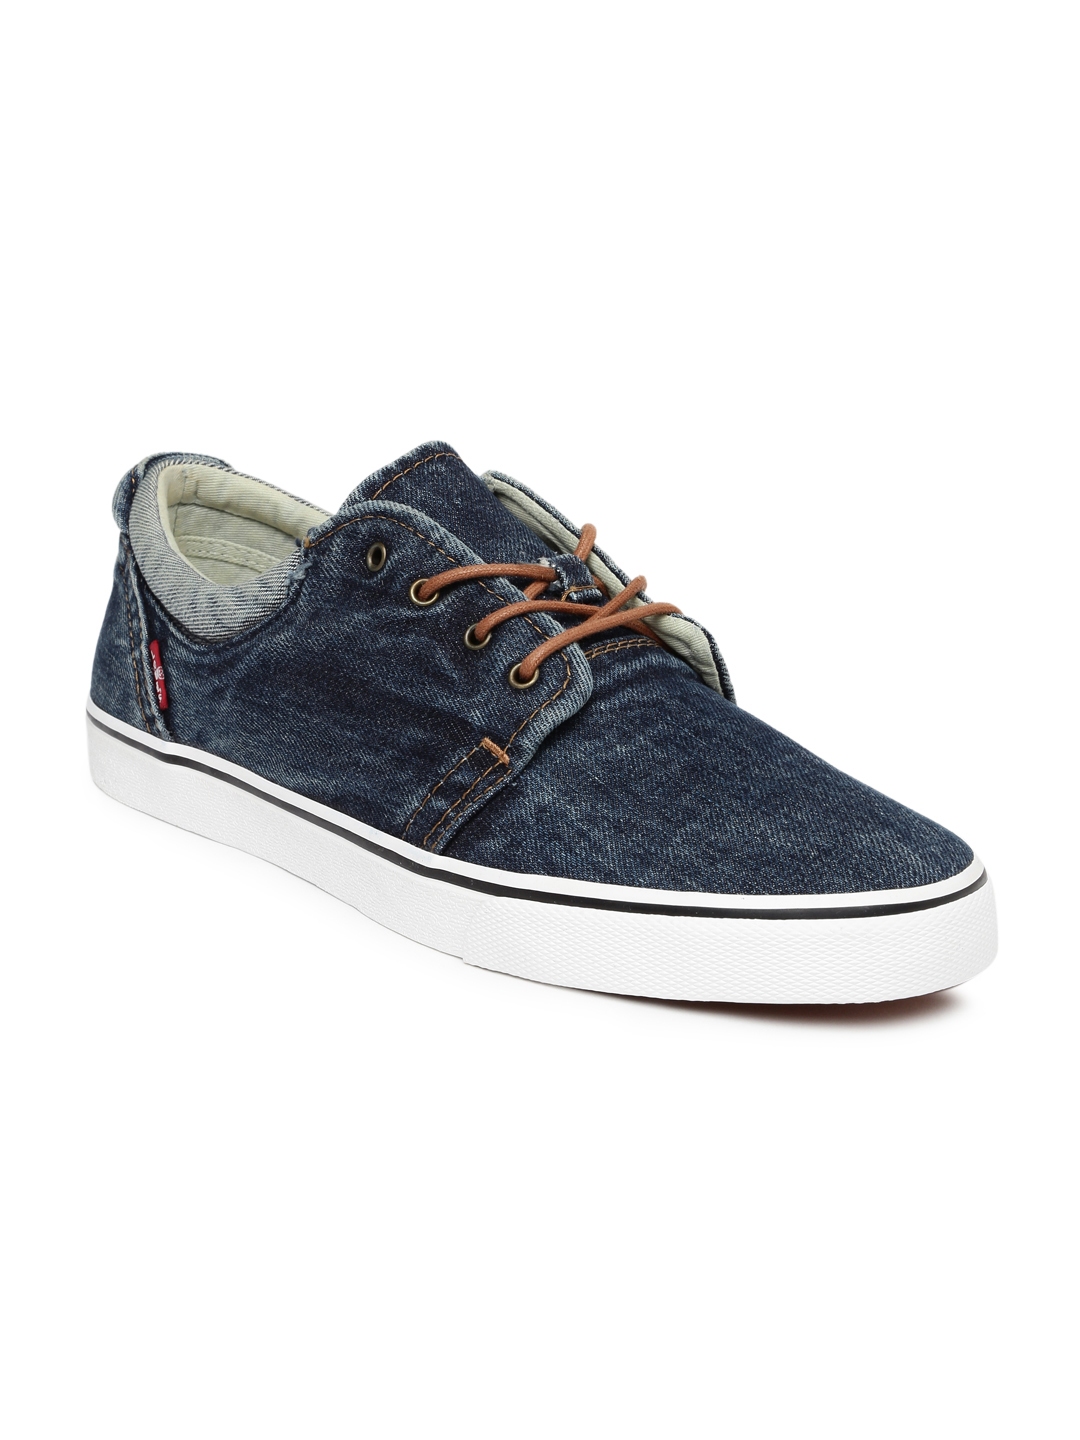 Buy Levis Men Blue Sneakers - Casual Shoes for Men 1813419 | Myntra